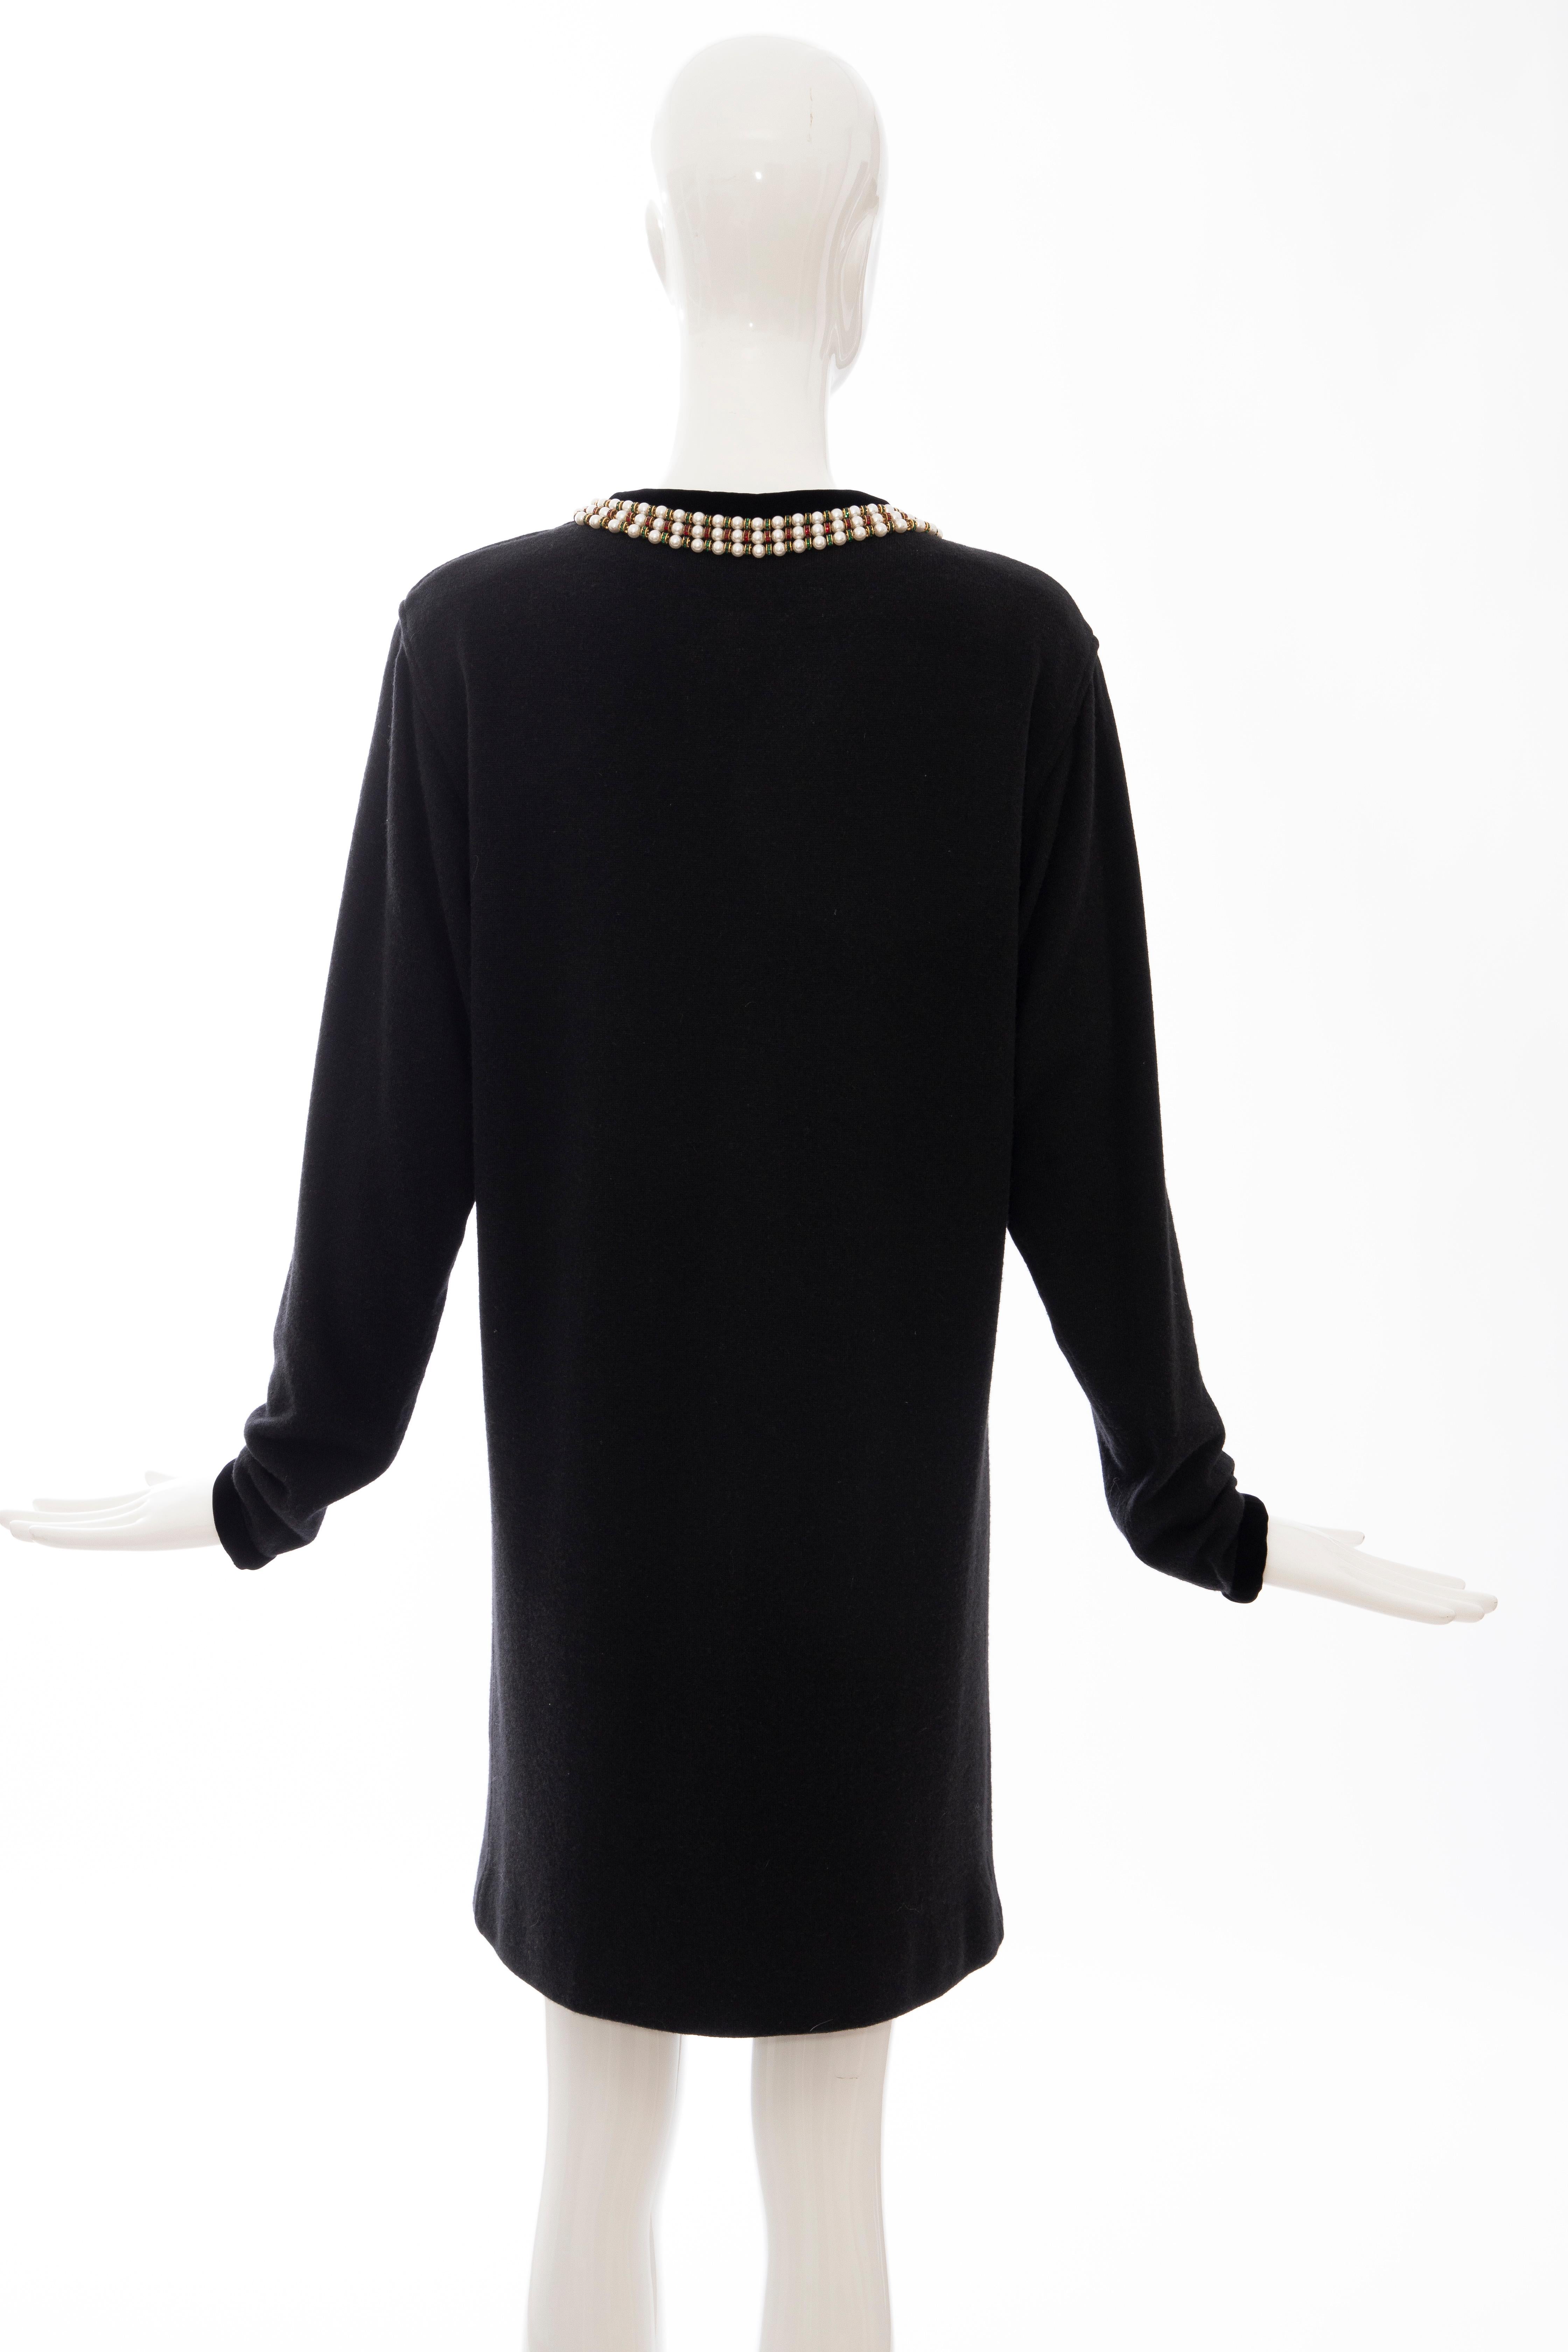 Oscar de la Renta Runway Black Embroidered Neckline Sweater Dress, Fall 1984 For Sale 2